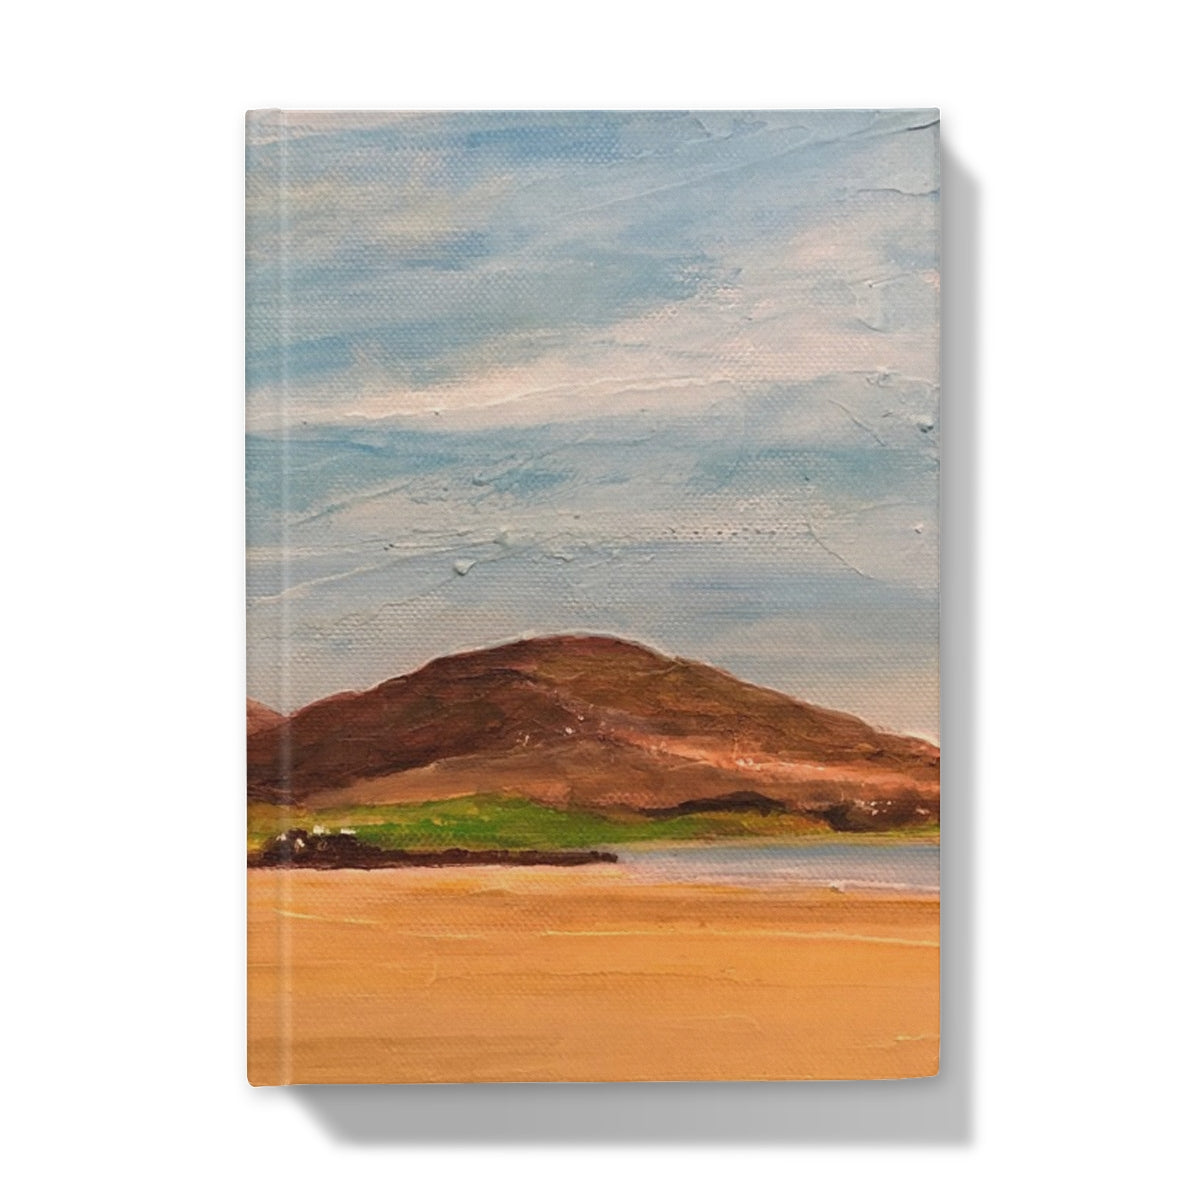 Uig Sands Lewis Art Gifts Hardback Journal-Journals & Notebooks-Hebridean Islands Art Gallery-5"x7"-Lined-Paintings, Prints, Homeware, Art Gifts From Scotland By Scottish Artist Kevin Hunter